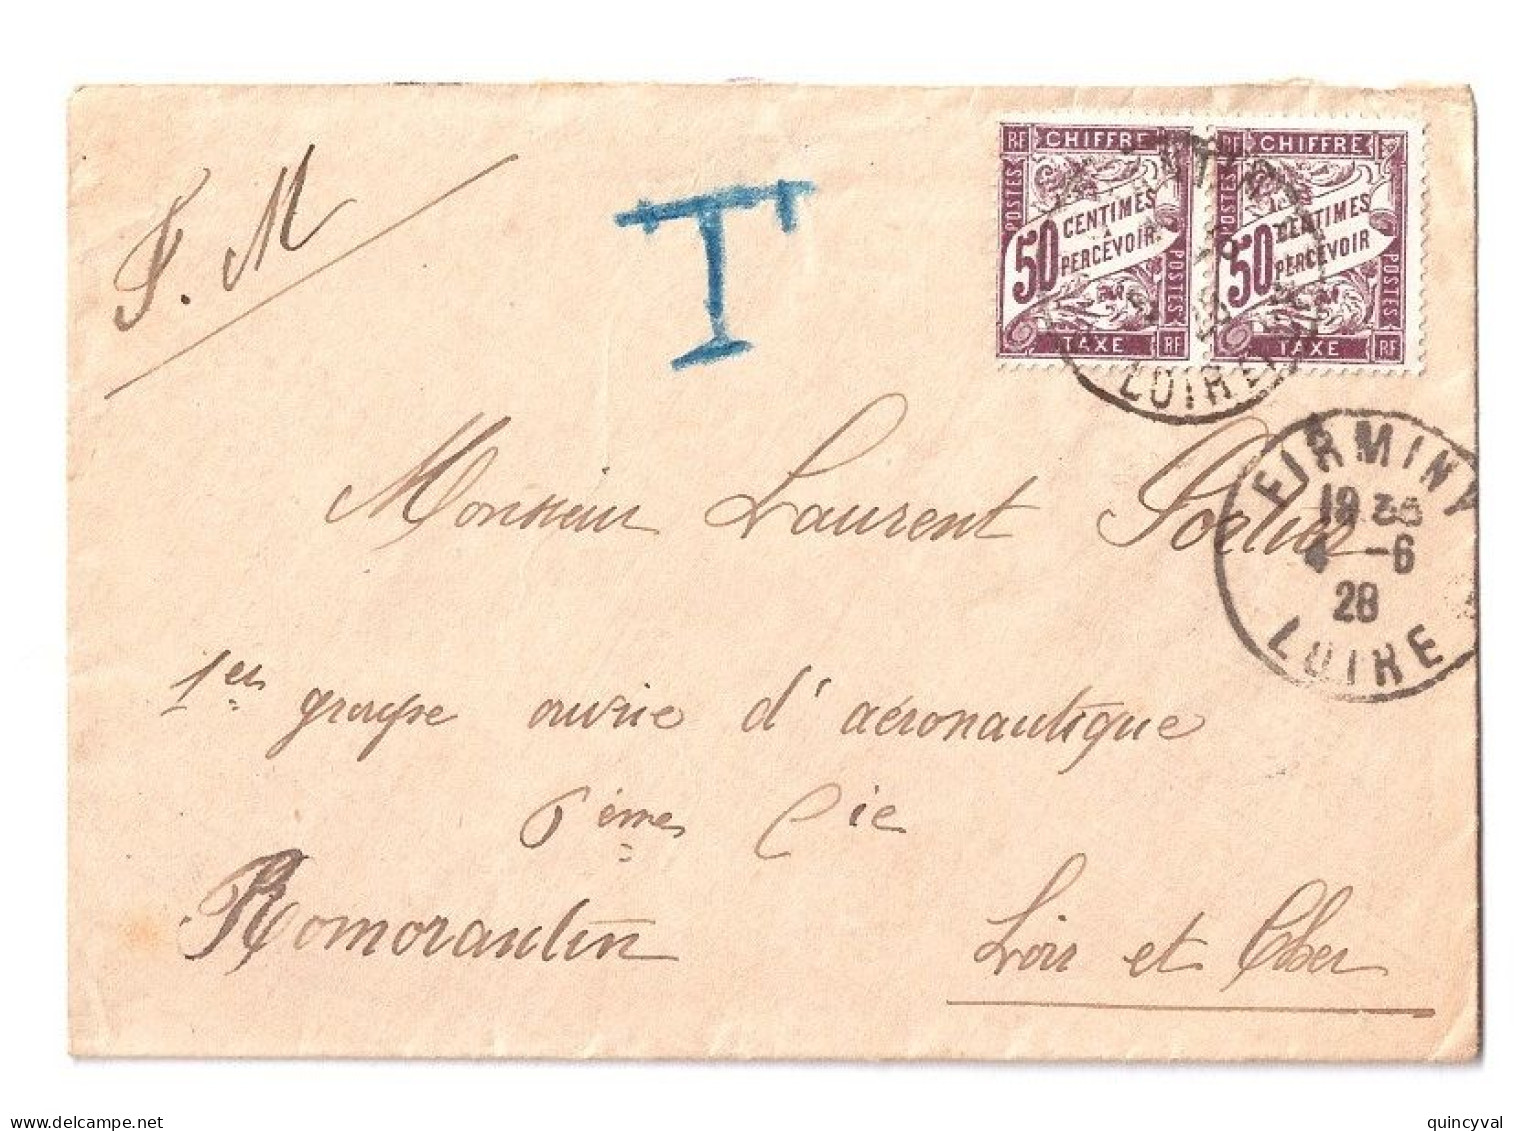 FIRMINY Loire Lettre Non Affranchie FM Ob 4 6 28 TAXEE Romorantin Loir Et Cher Taxe Banderole 50c X 2 Ob 1928 Yv 37 - 1859-1959 Lettres & Documents